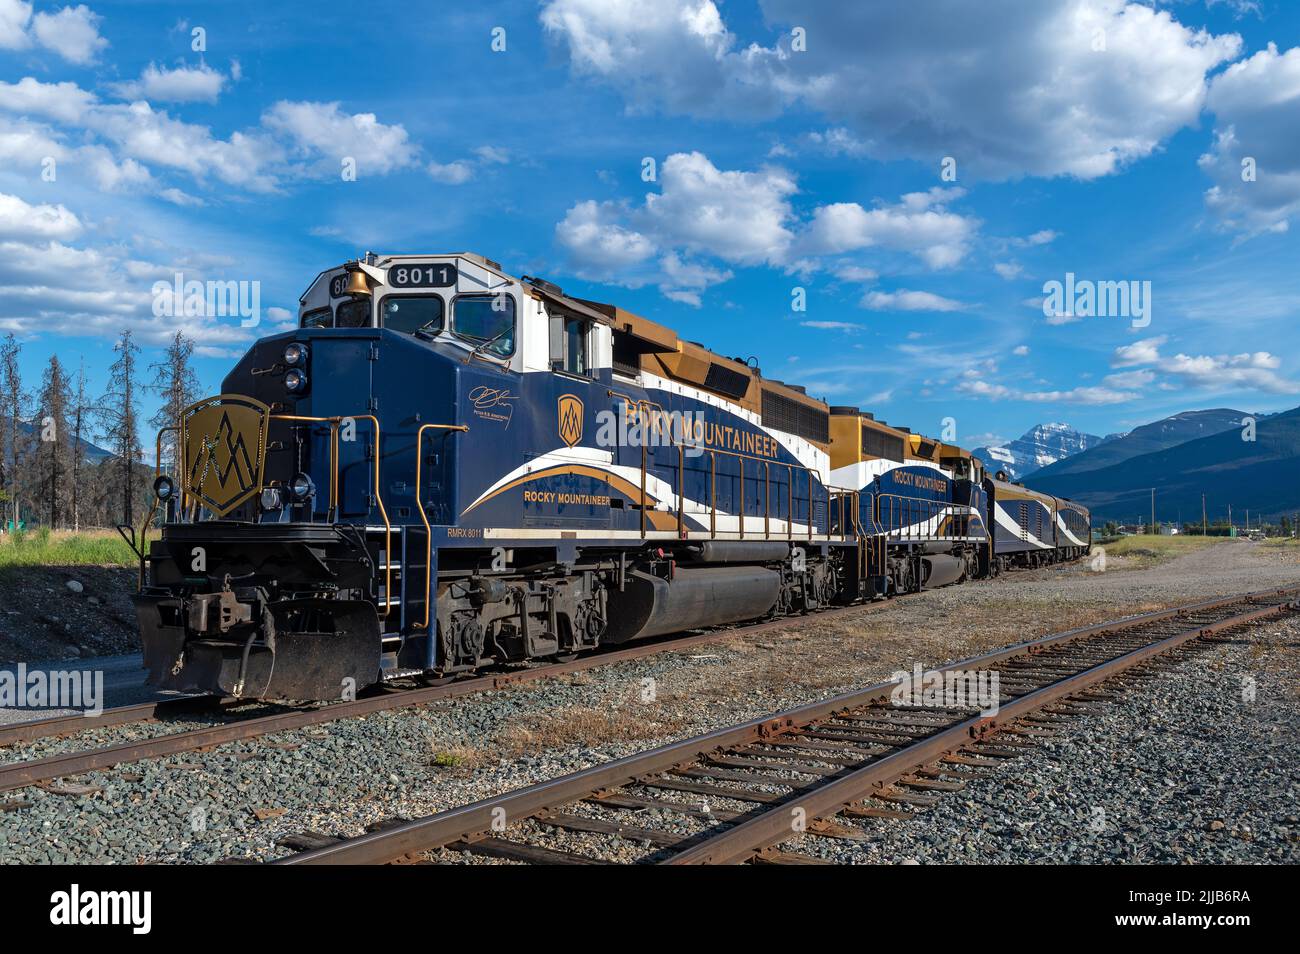 Rocky Mountaineer train locomotive with wagons on the railroad tracks of Jasper train station, Jasper, Alberta, Canada. Stock Photo